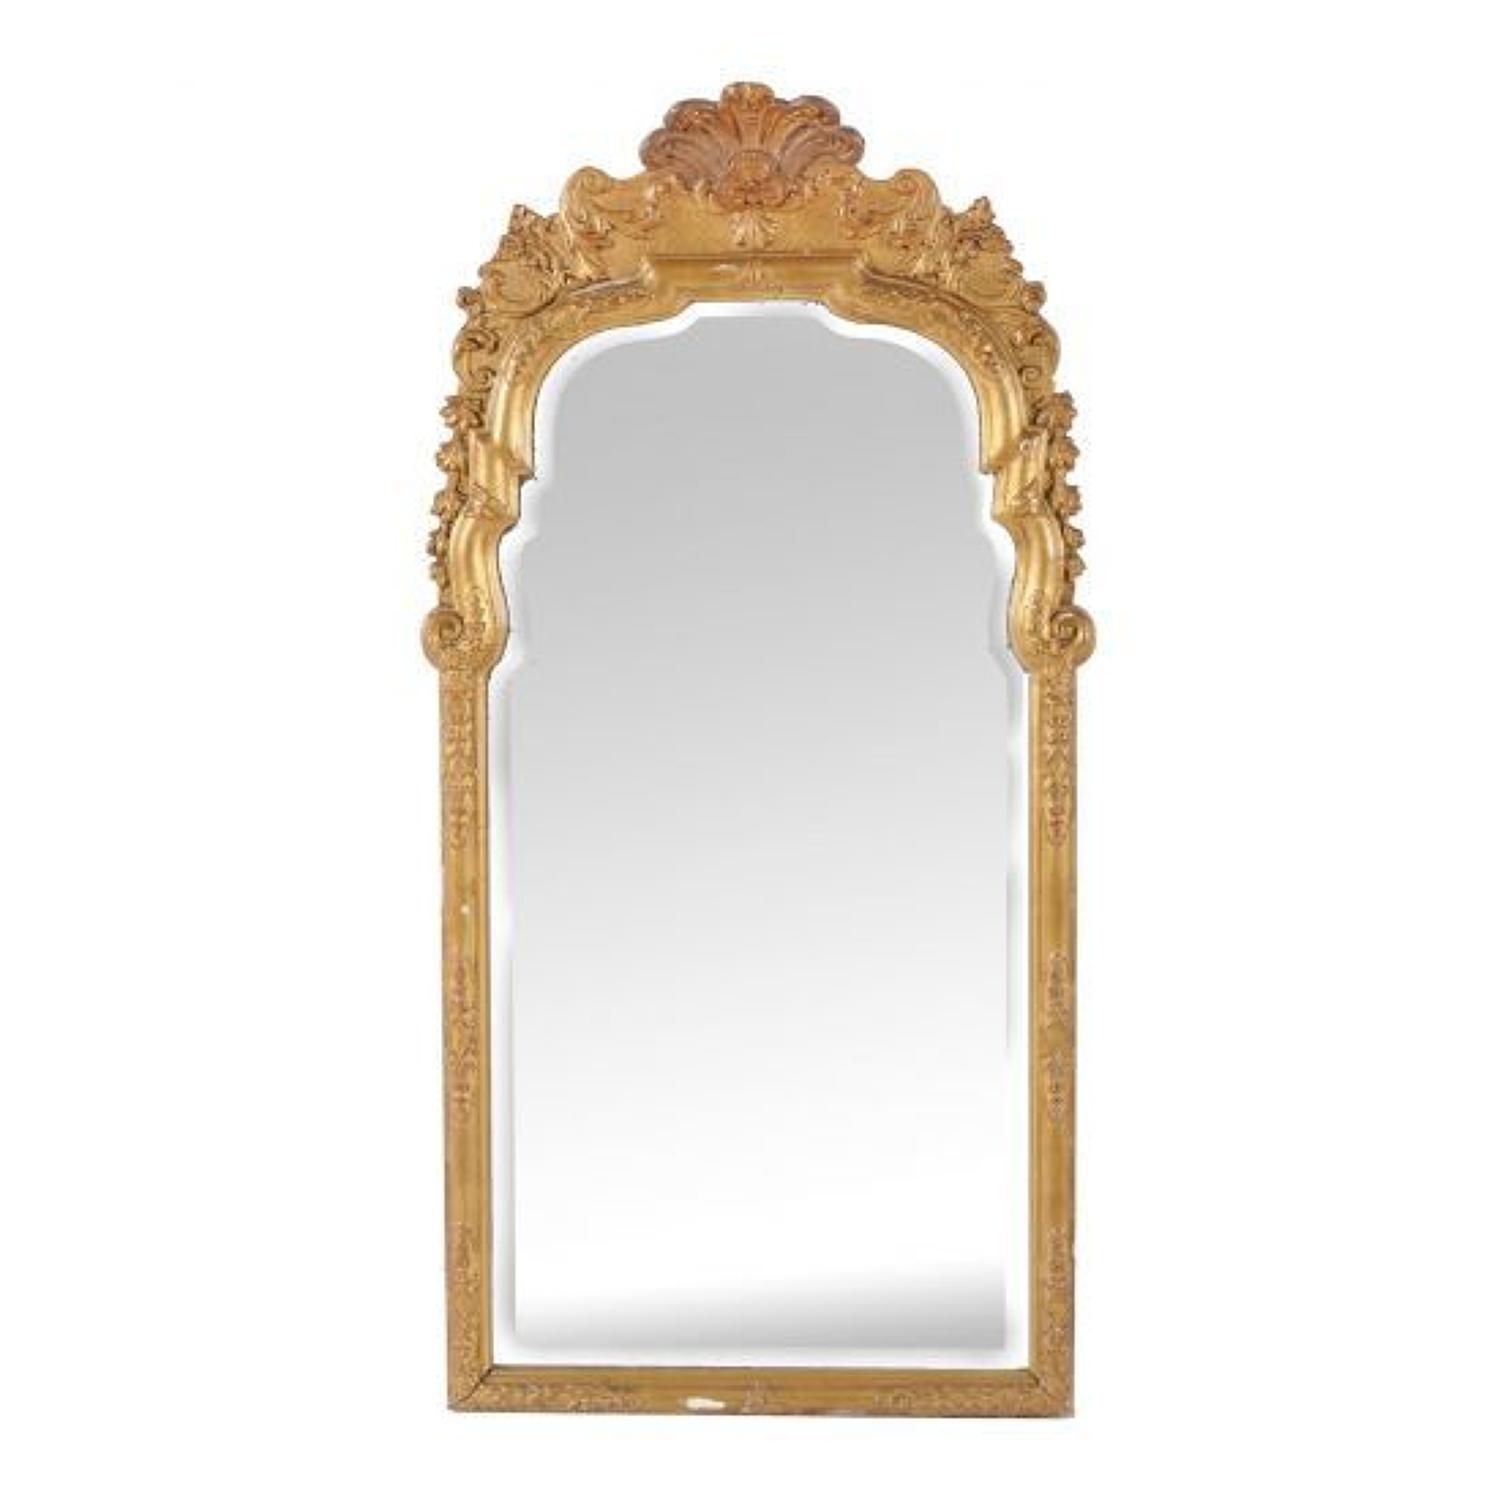 A gilt-wood George I style mirror